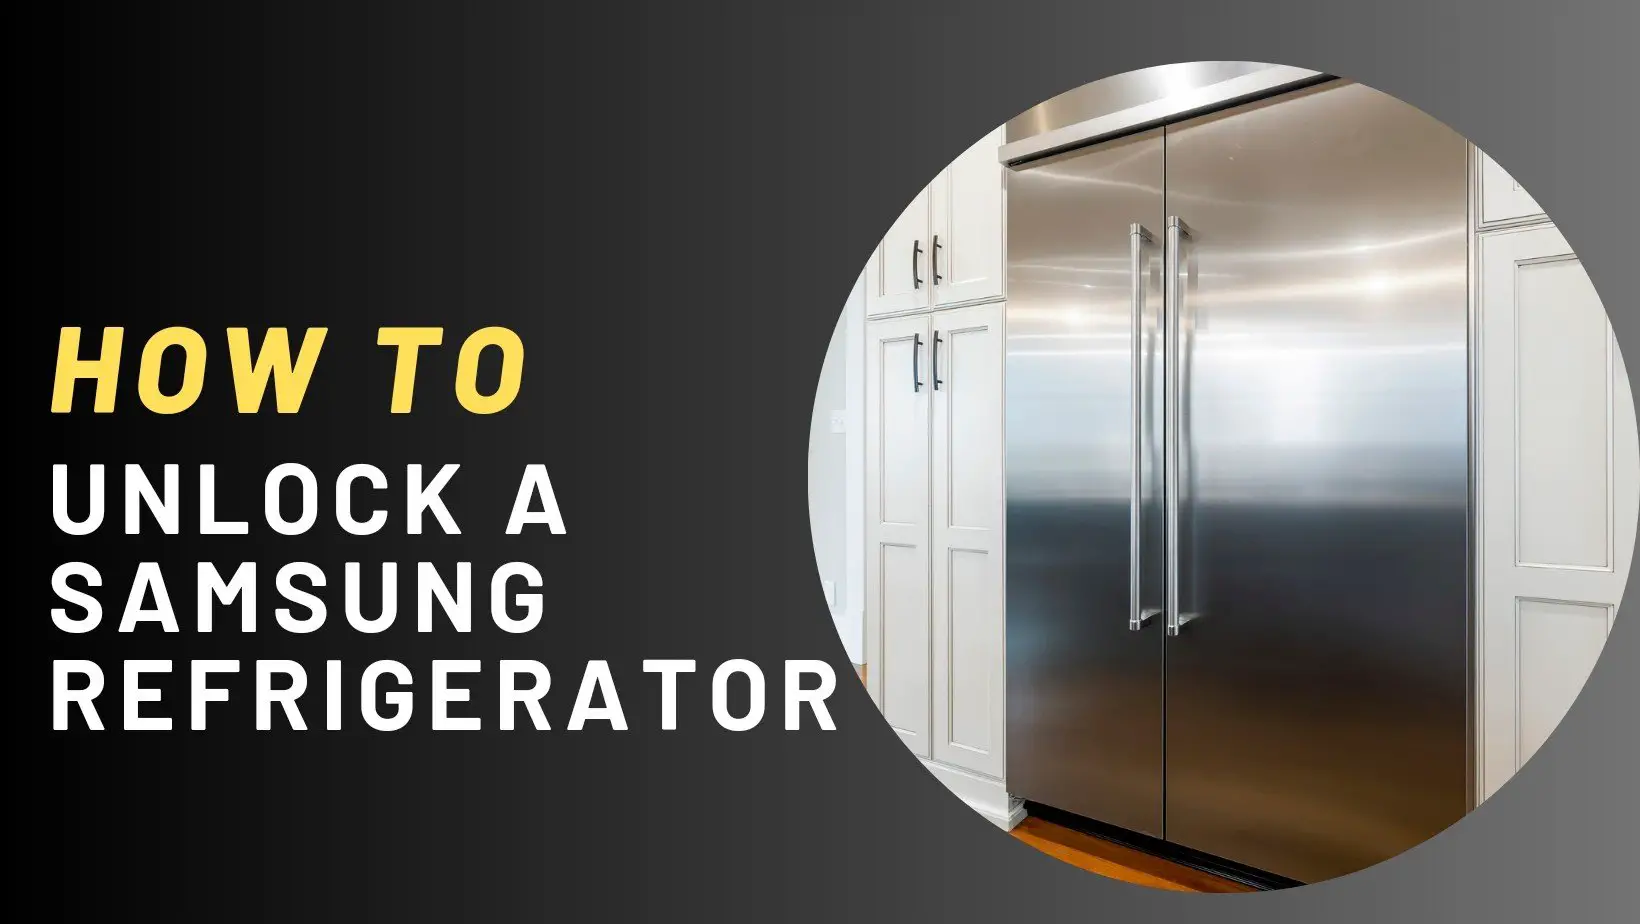 How to unlock a Samsung refrigerator